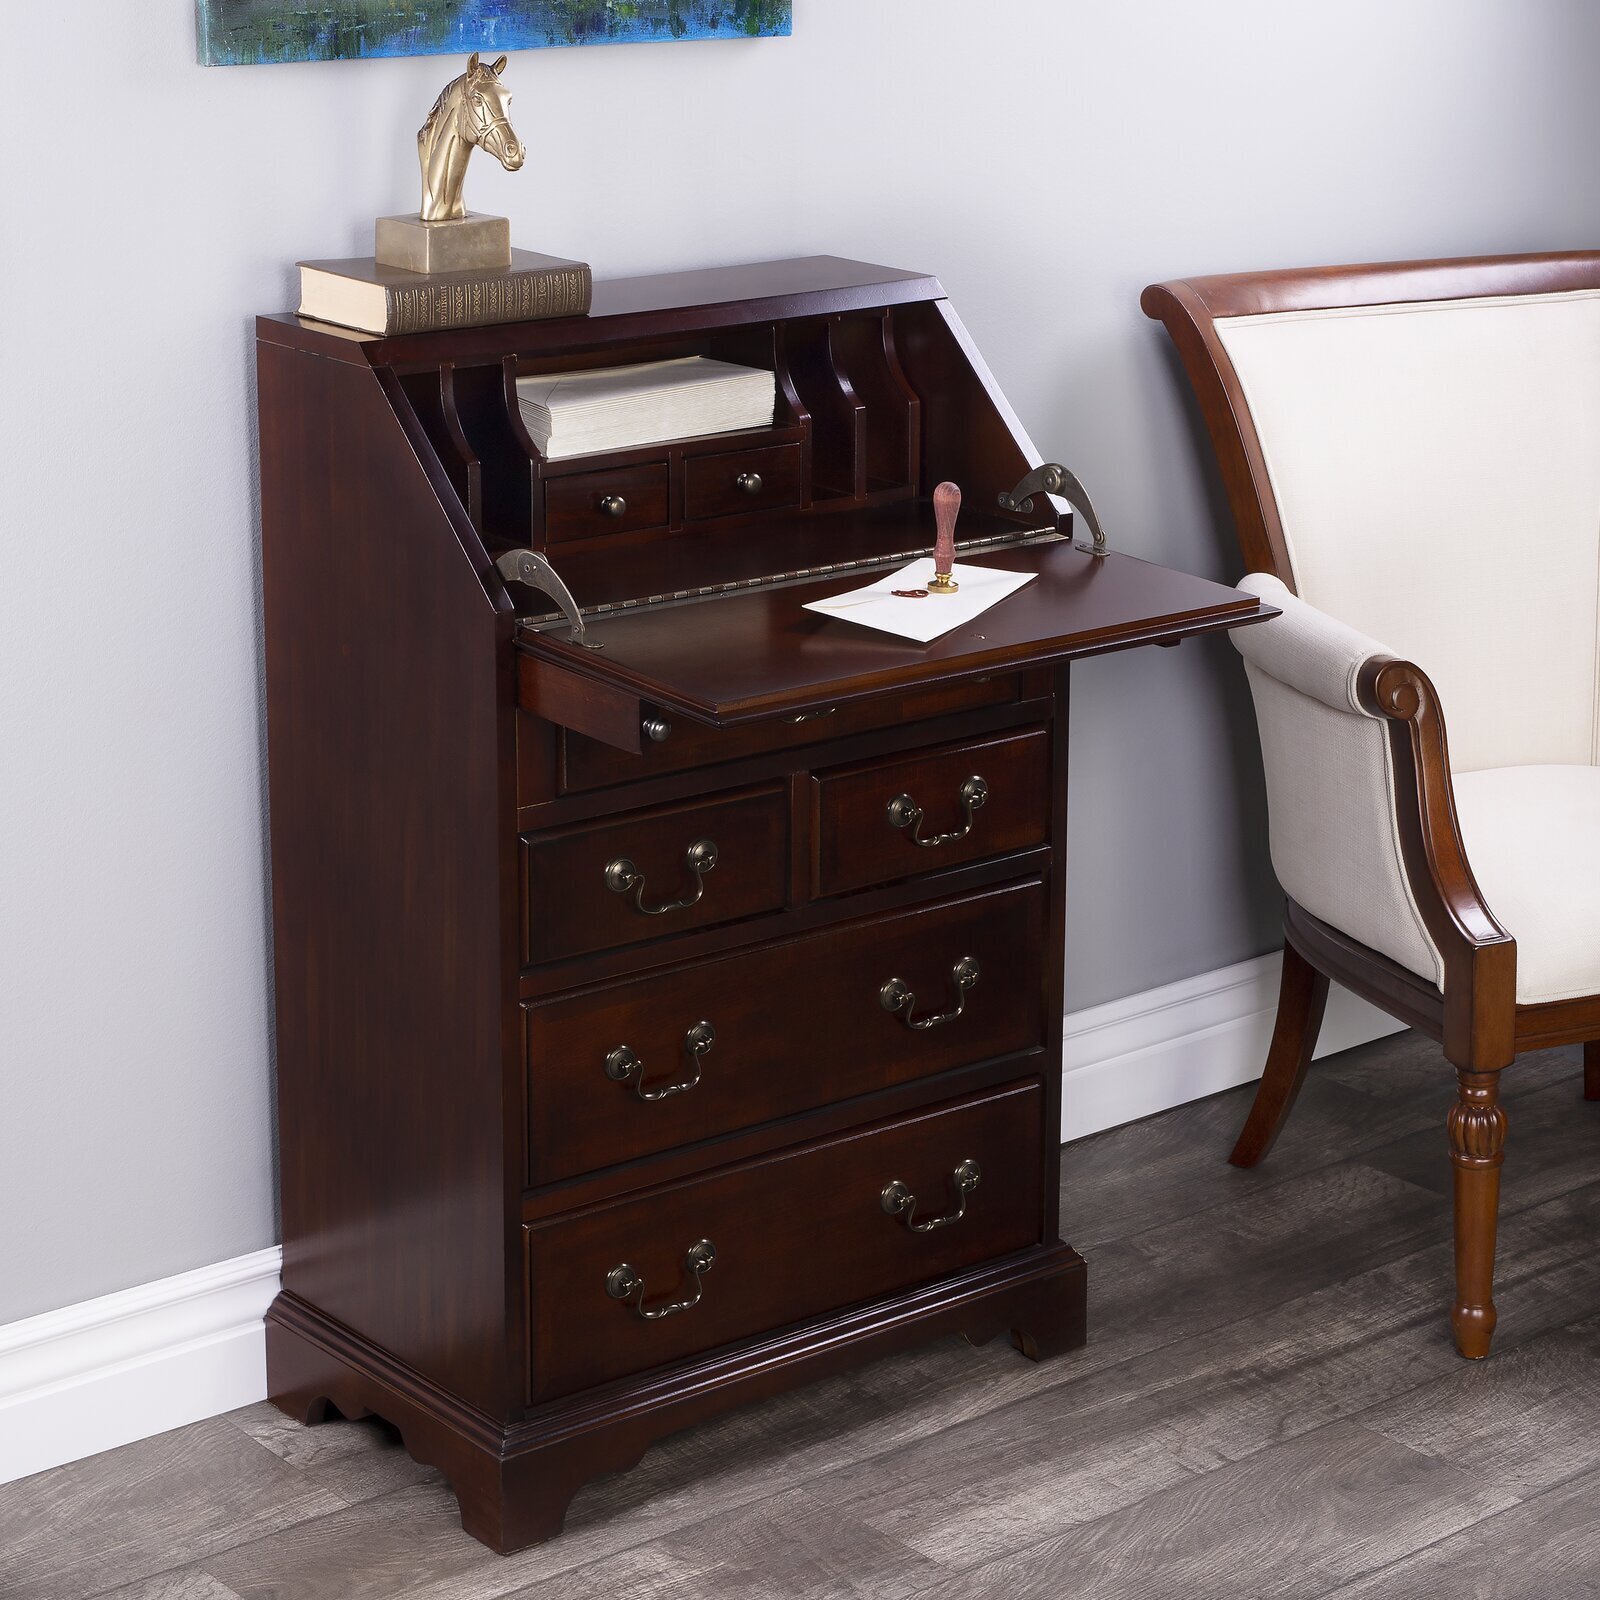 Secretary Desk Cabinet with Vintage Handles